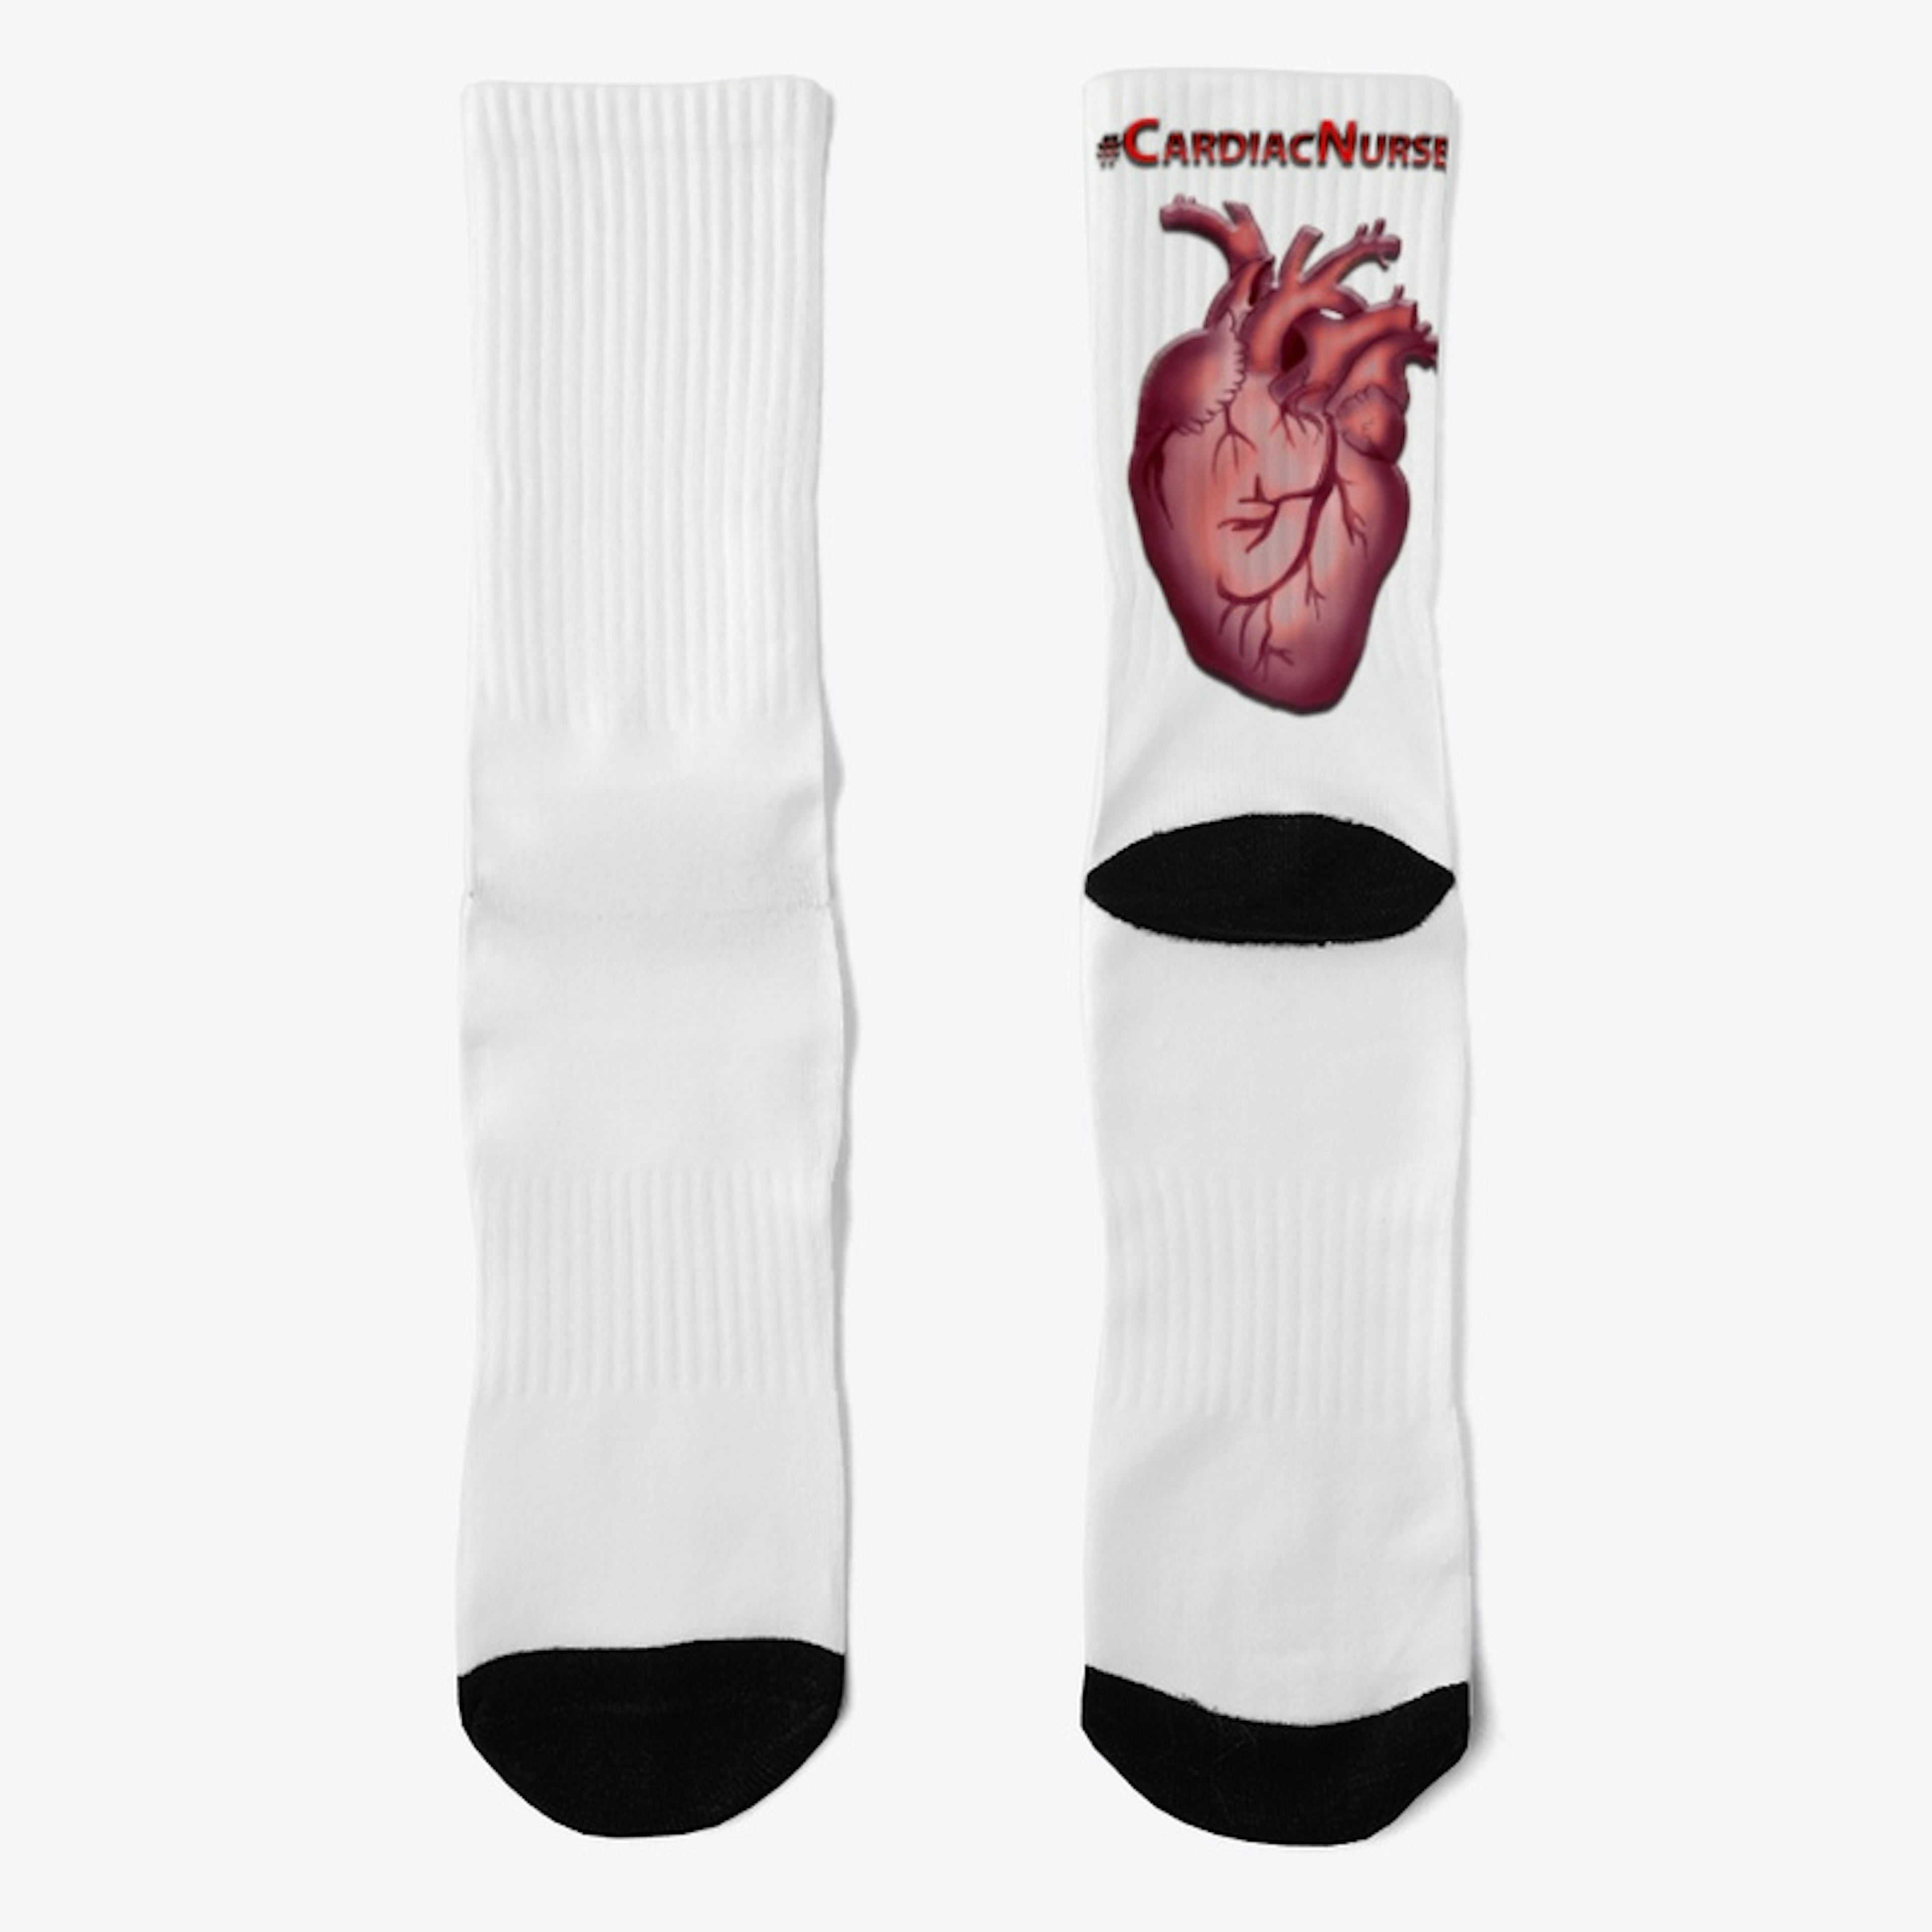 Cardiac Nurse Socks!